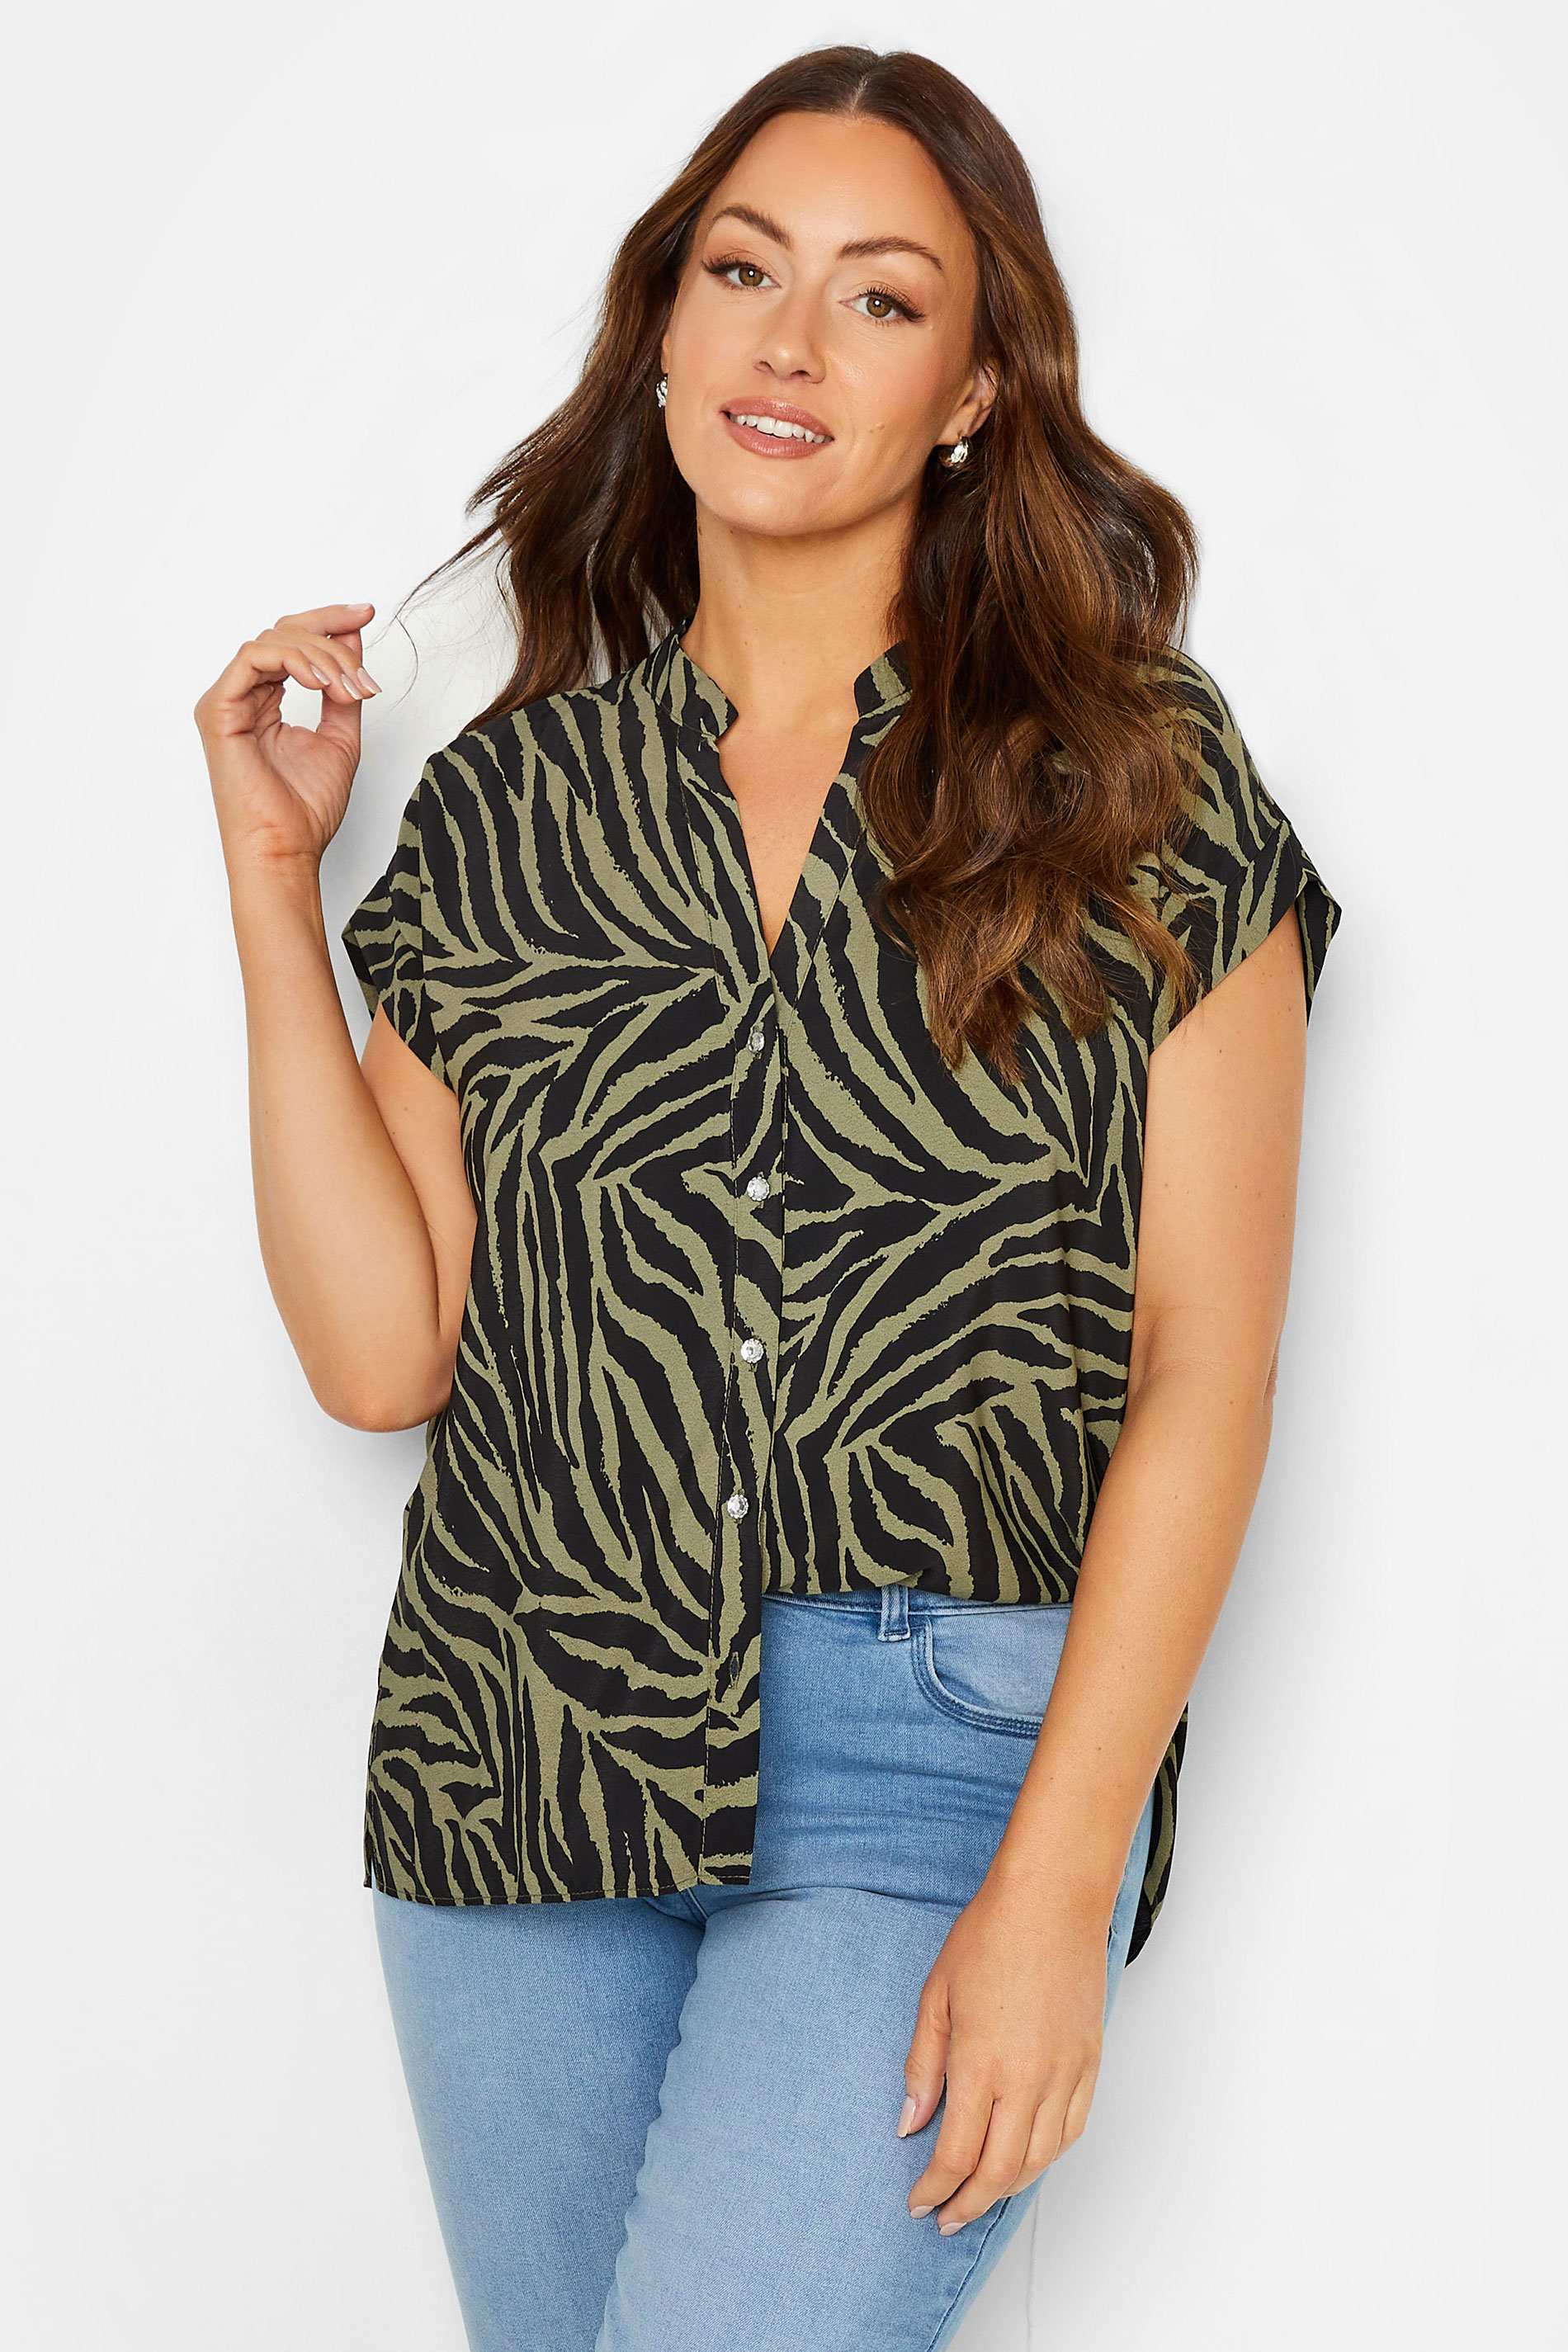 M&Co Khaki Green Zebra Print Shirt | M&Co  1